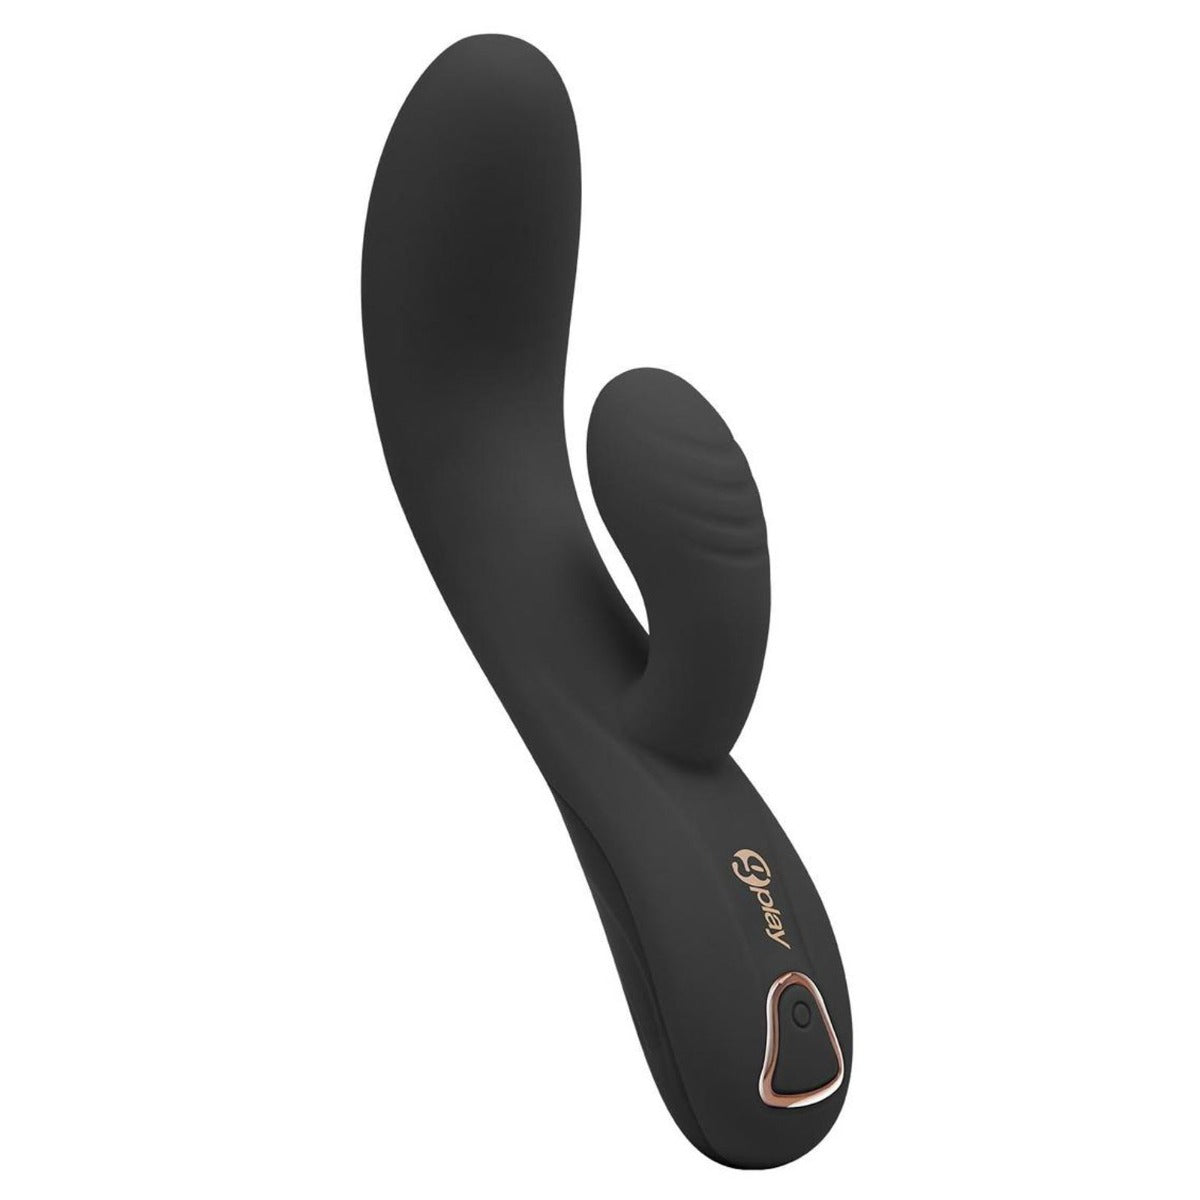 Bodywand | G Play Ergonomic G Spot Squirt Trainer Vibrator And Clitoral Stimulator - Black